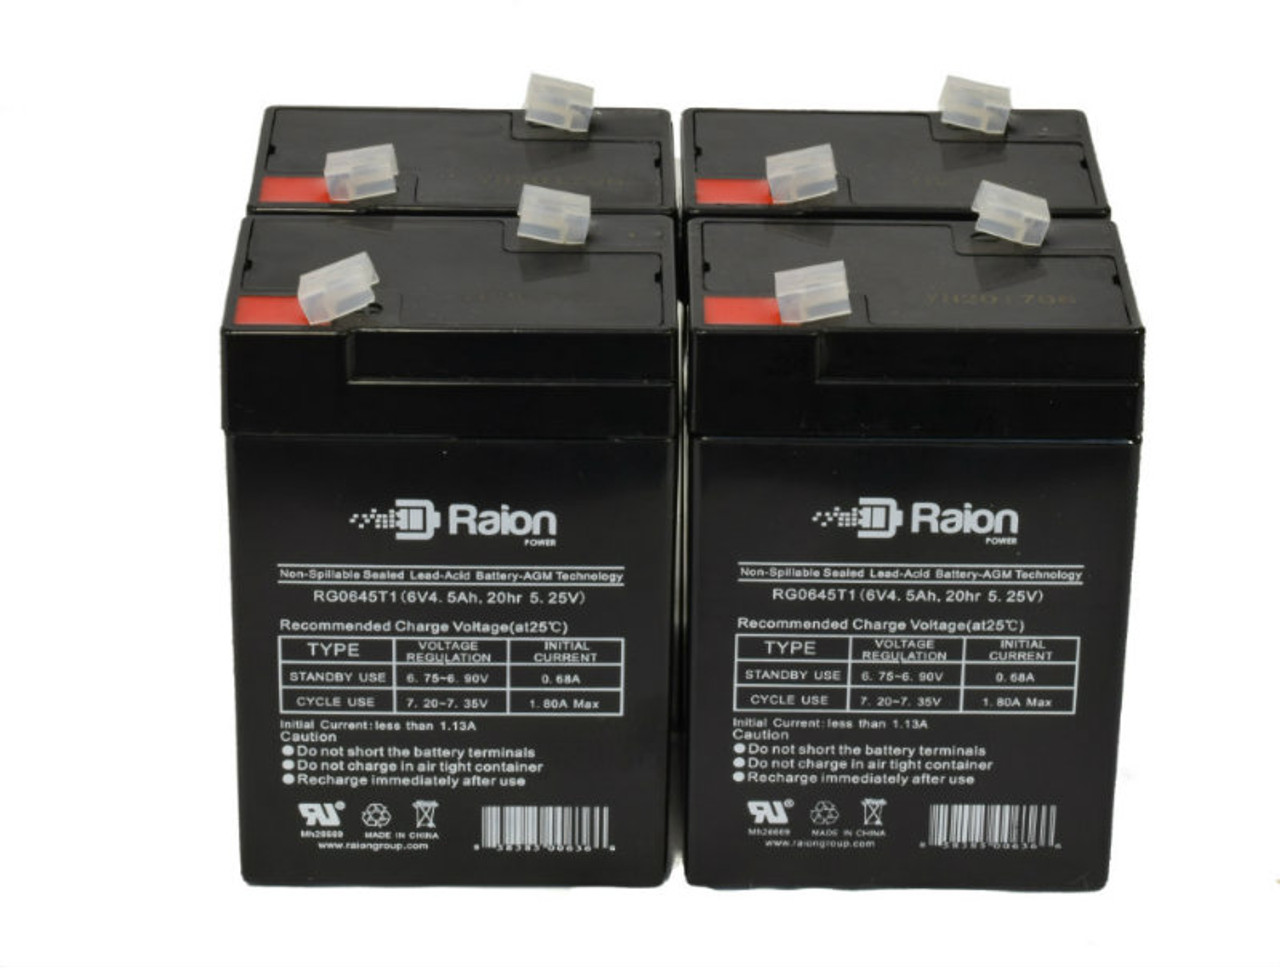 Raion Power 6V 4.5Ah Replacement Emergency Light Battery for Elan MB6V - 4 Pack